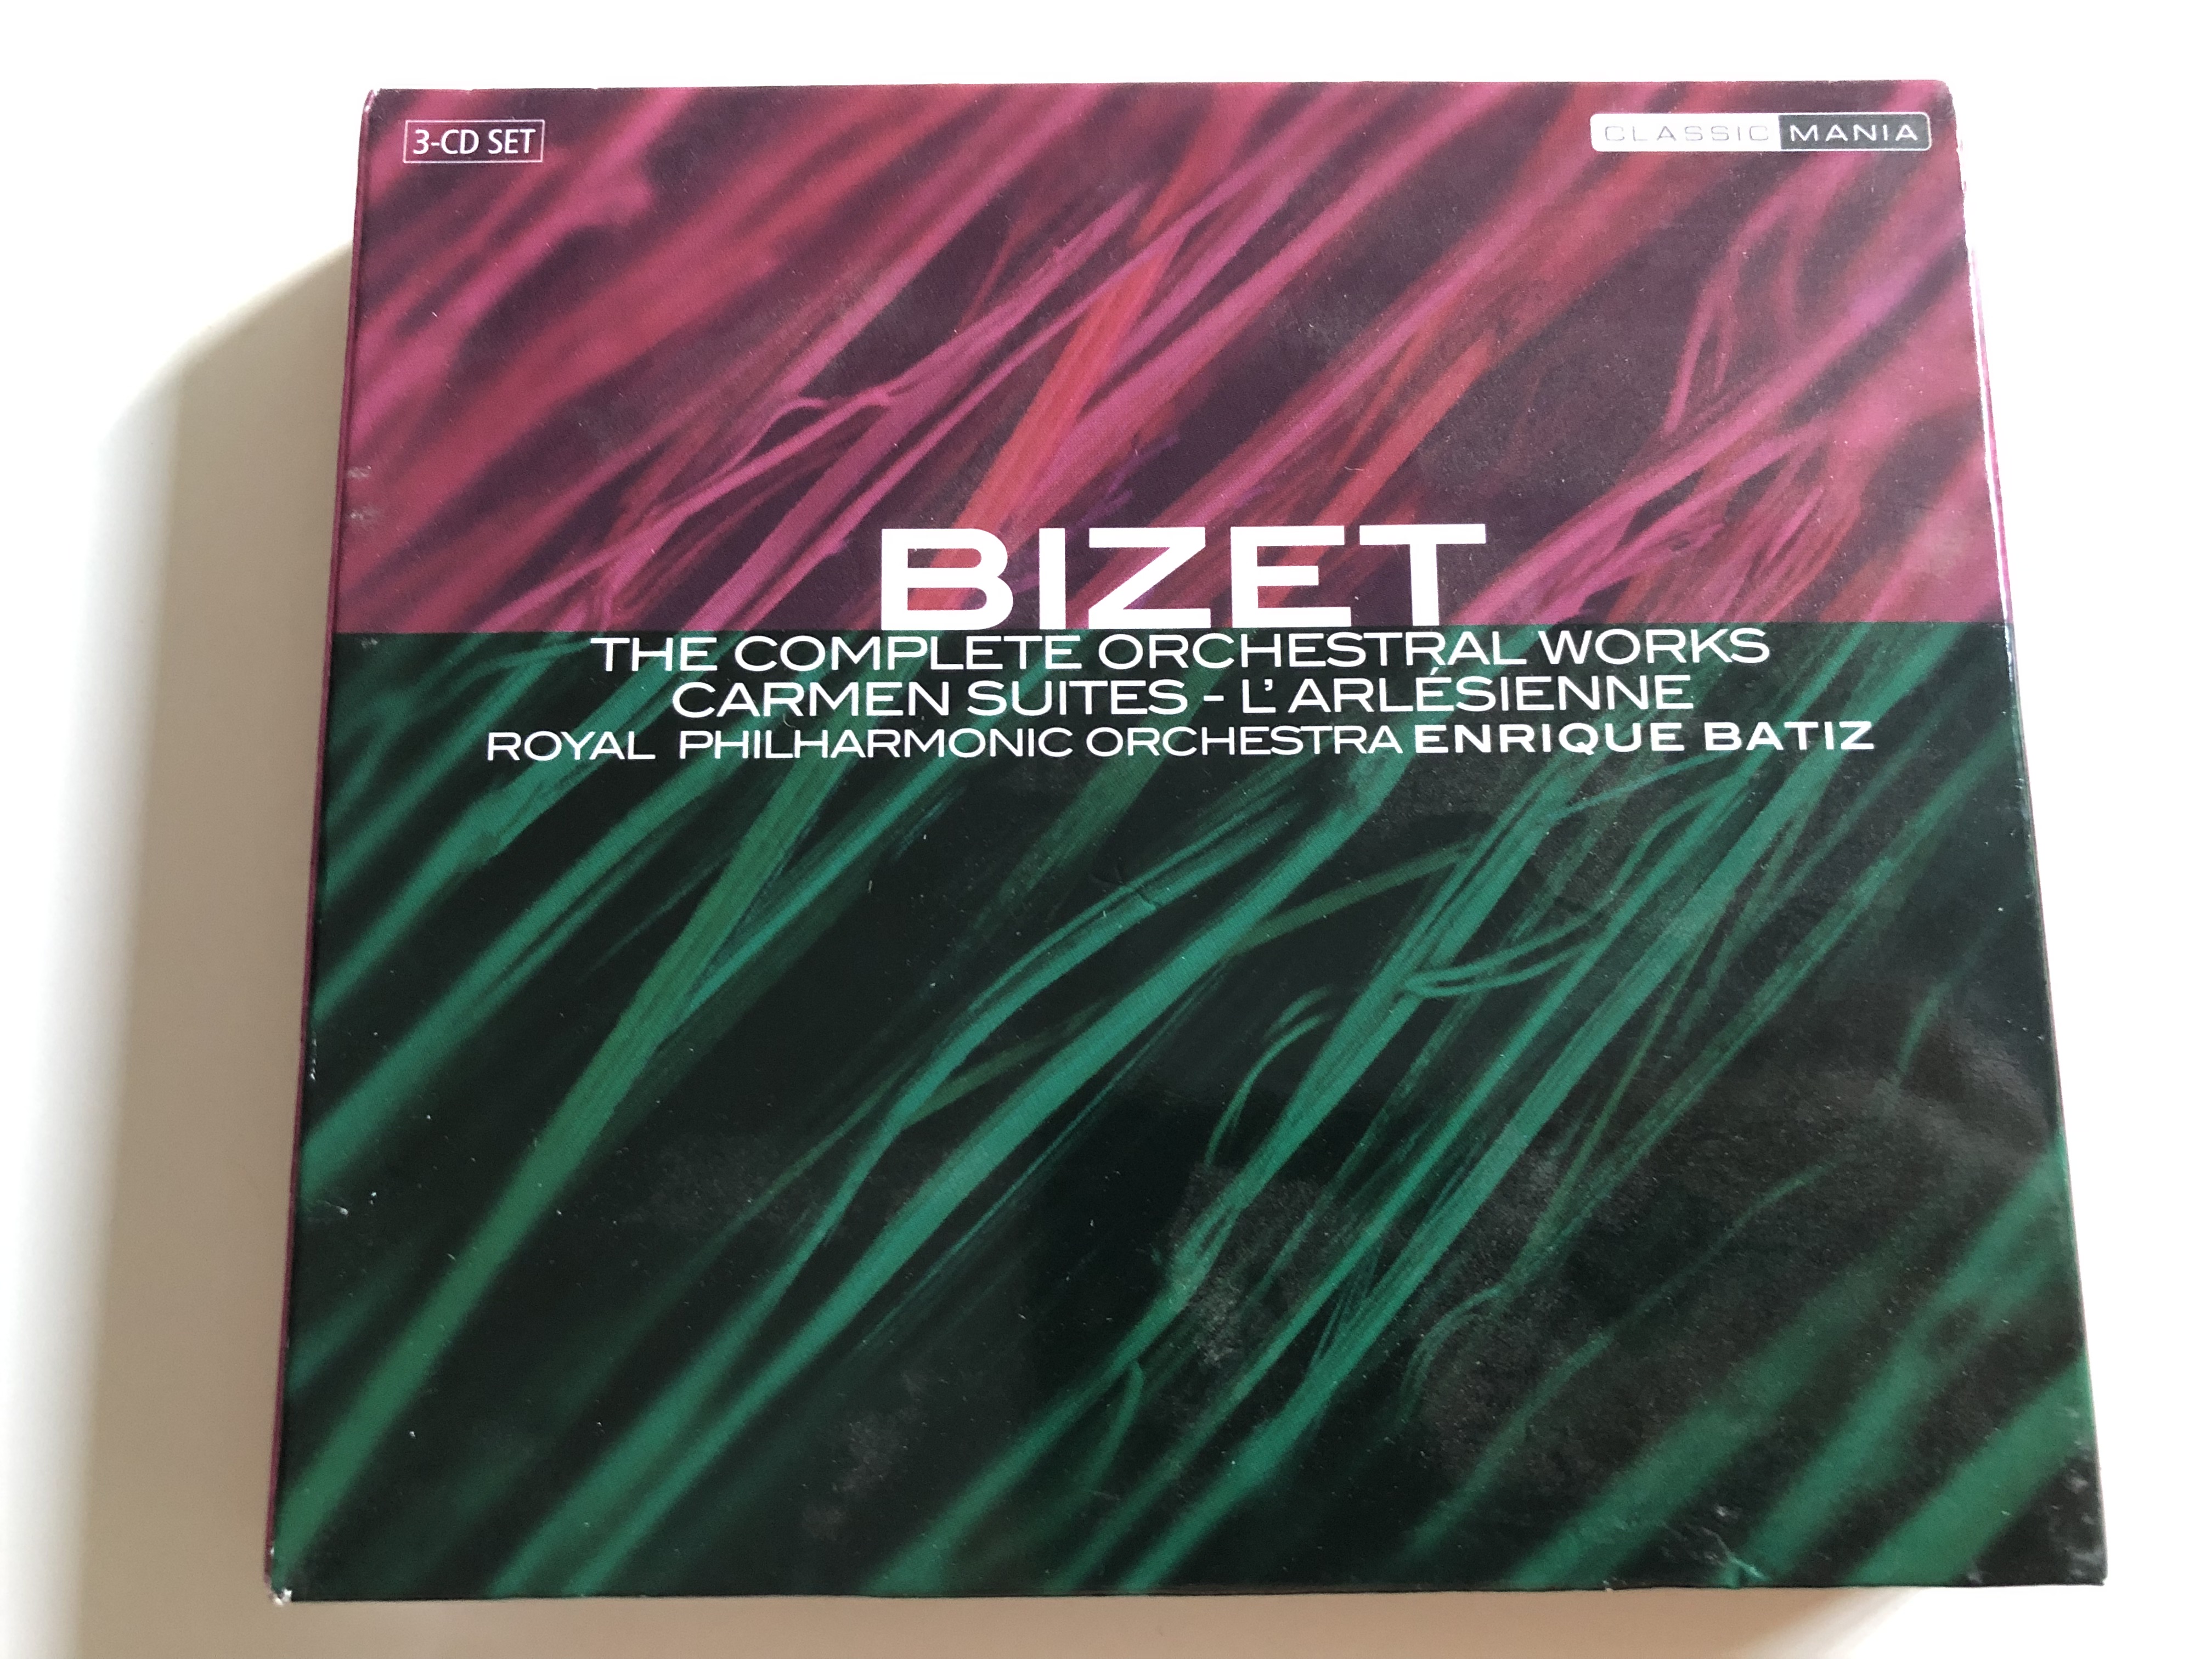 bizet-the-complete-orchestral-works-carmen-suites-l-arl-sienne-royal-philharmonic-orchestra-conducted-by-enrique-batiz-classic-mania-3cd-set-1-.jpg